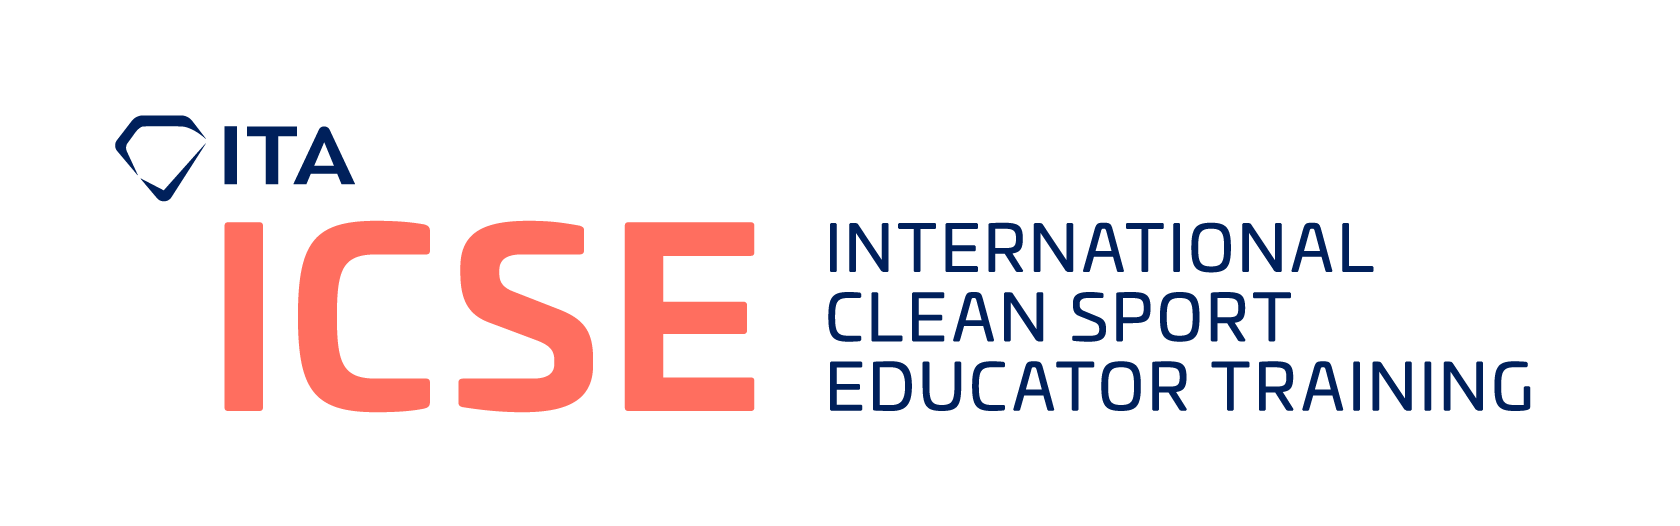 International Clean Sport Educator Program